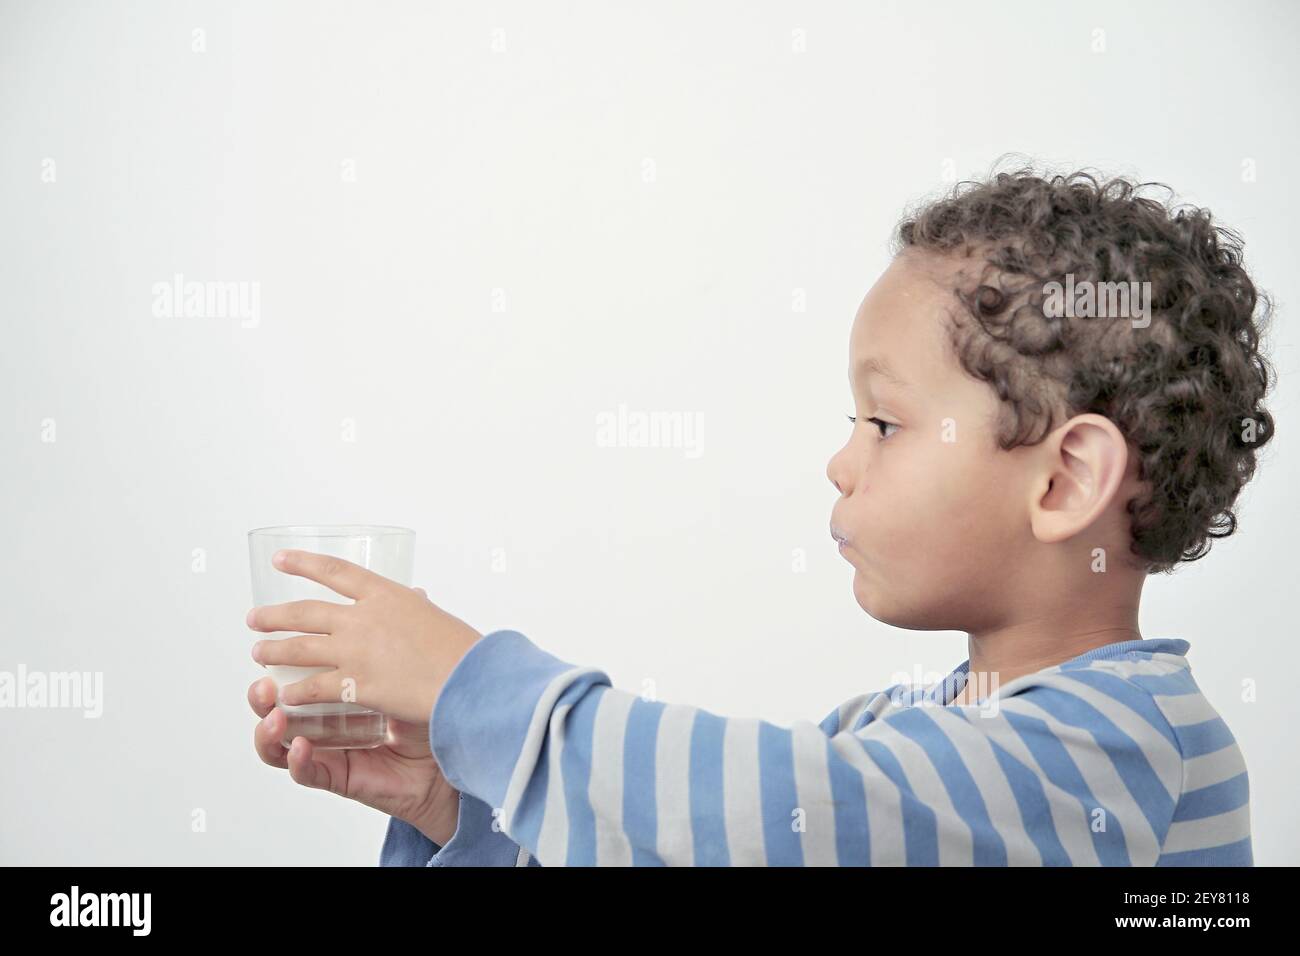 child drinking milk for breakfast on white background stock photo Stock Photo